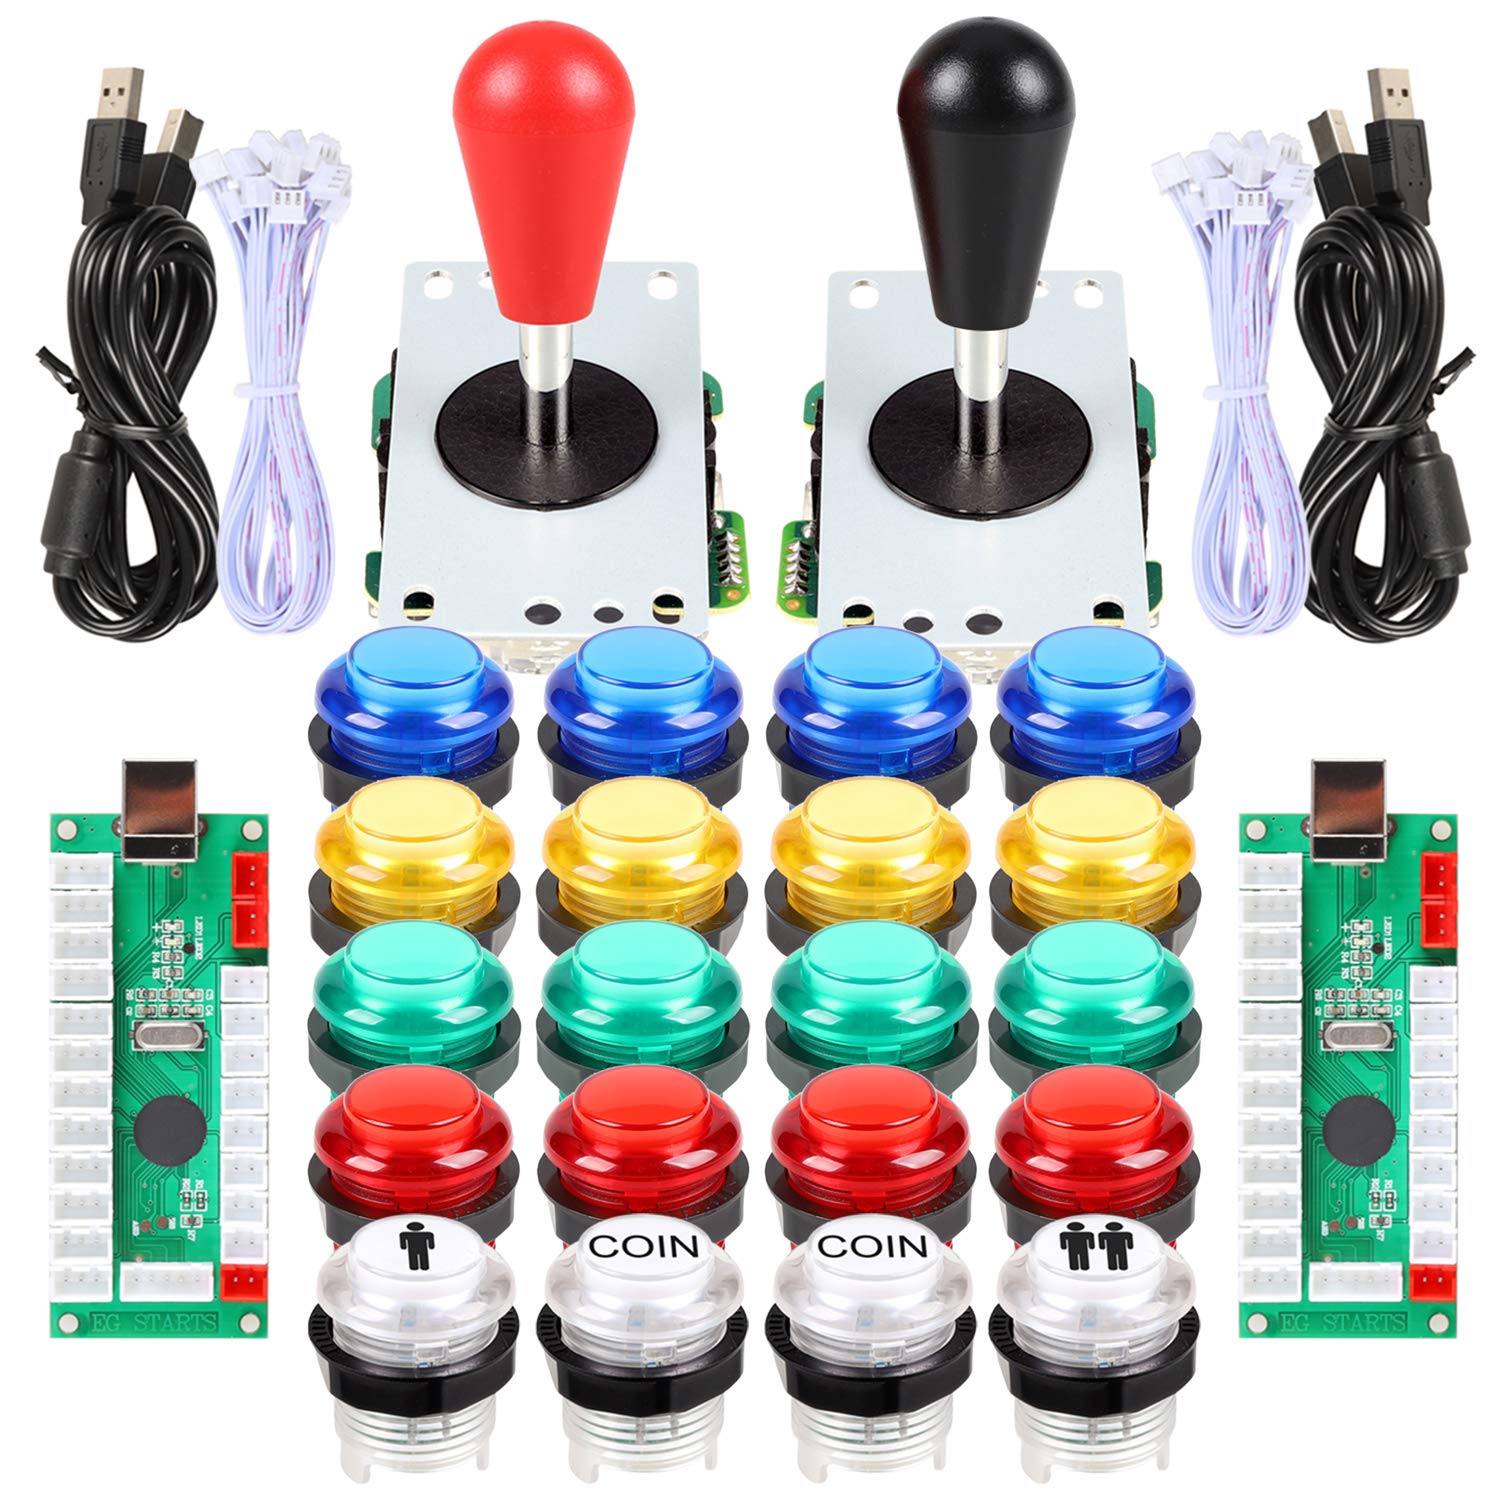 EG STARTS 2 Spieler LED Arcade DIY Teile 2X USB Encoder + 2X Ellipse Oval Style Joystick + 20x LED Arcade Tasten für PC MAME Raspberry Pi Windows System (Mischfarben Kit)